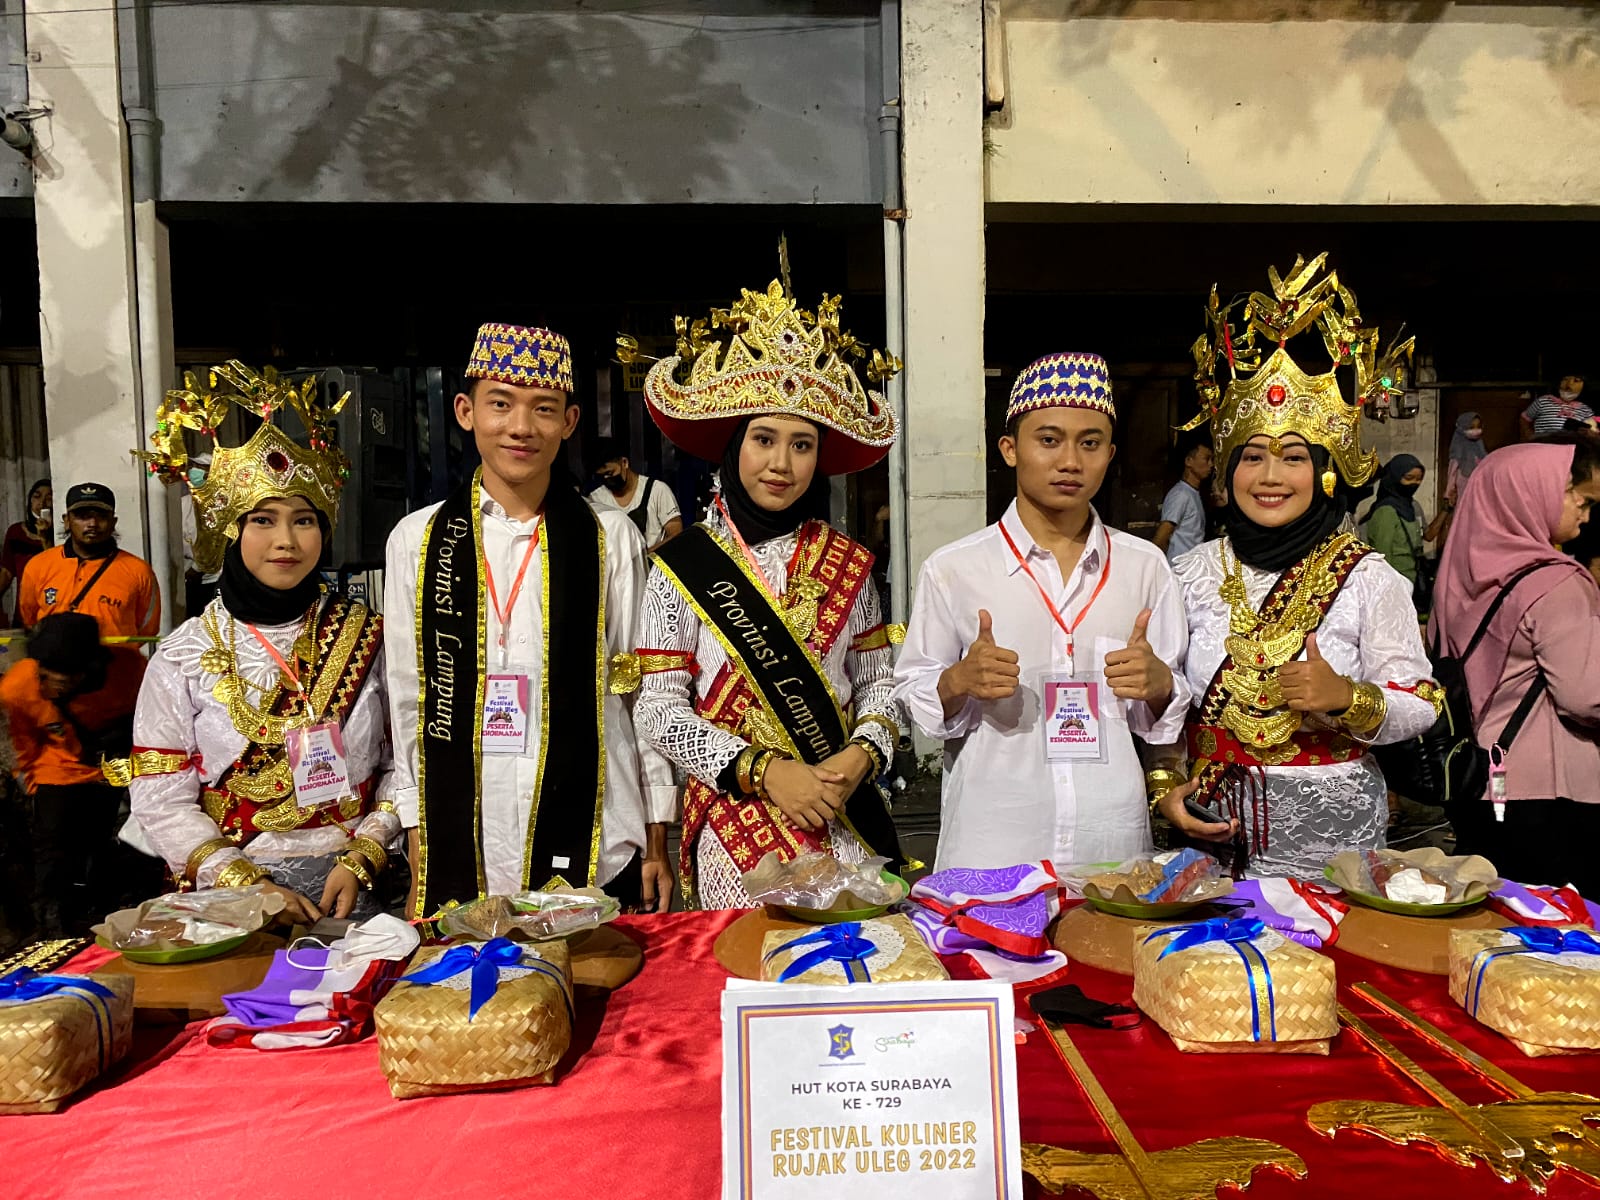 Himalaya Ikut Memeriahkan Festival Kuliner Rujak Uleg Kota Surabaya